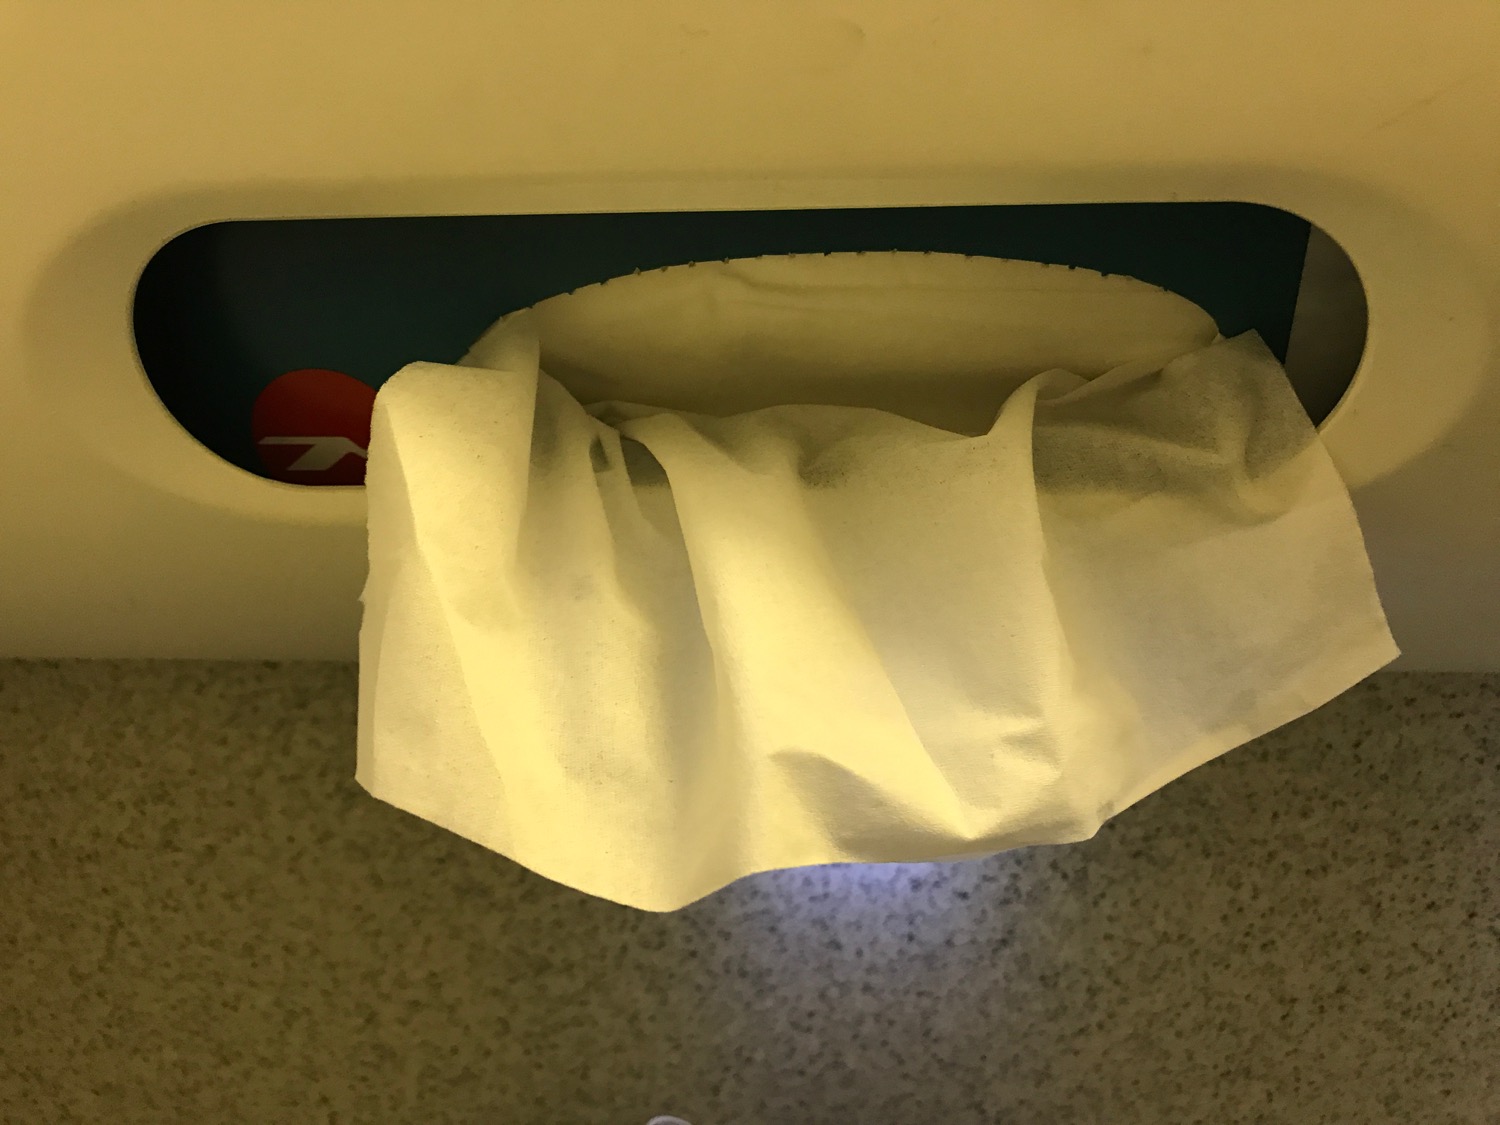 a tissue paper in a tissue holder